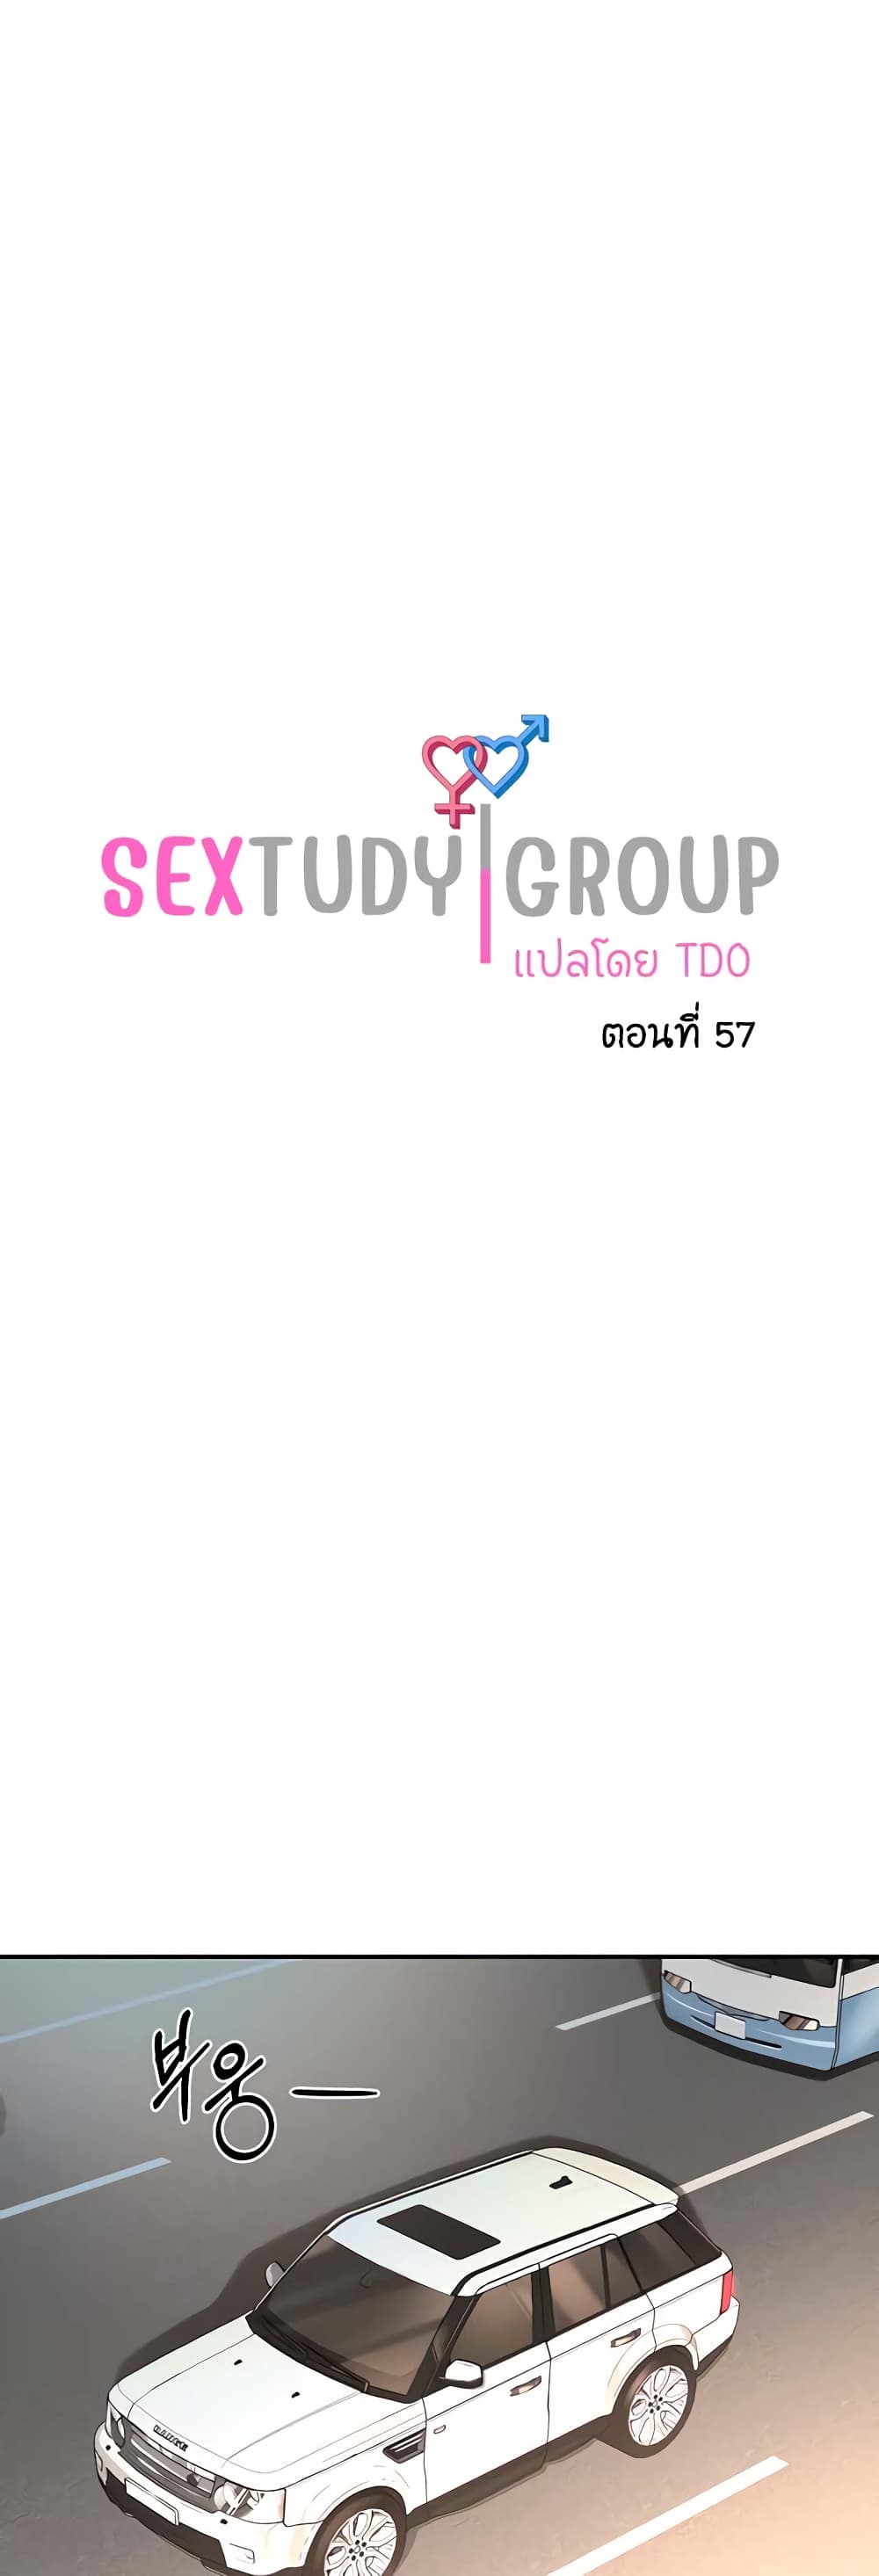 Sextudy Group 57-57